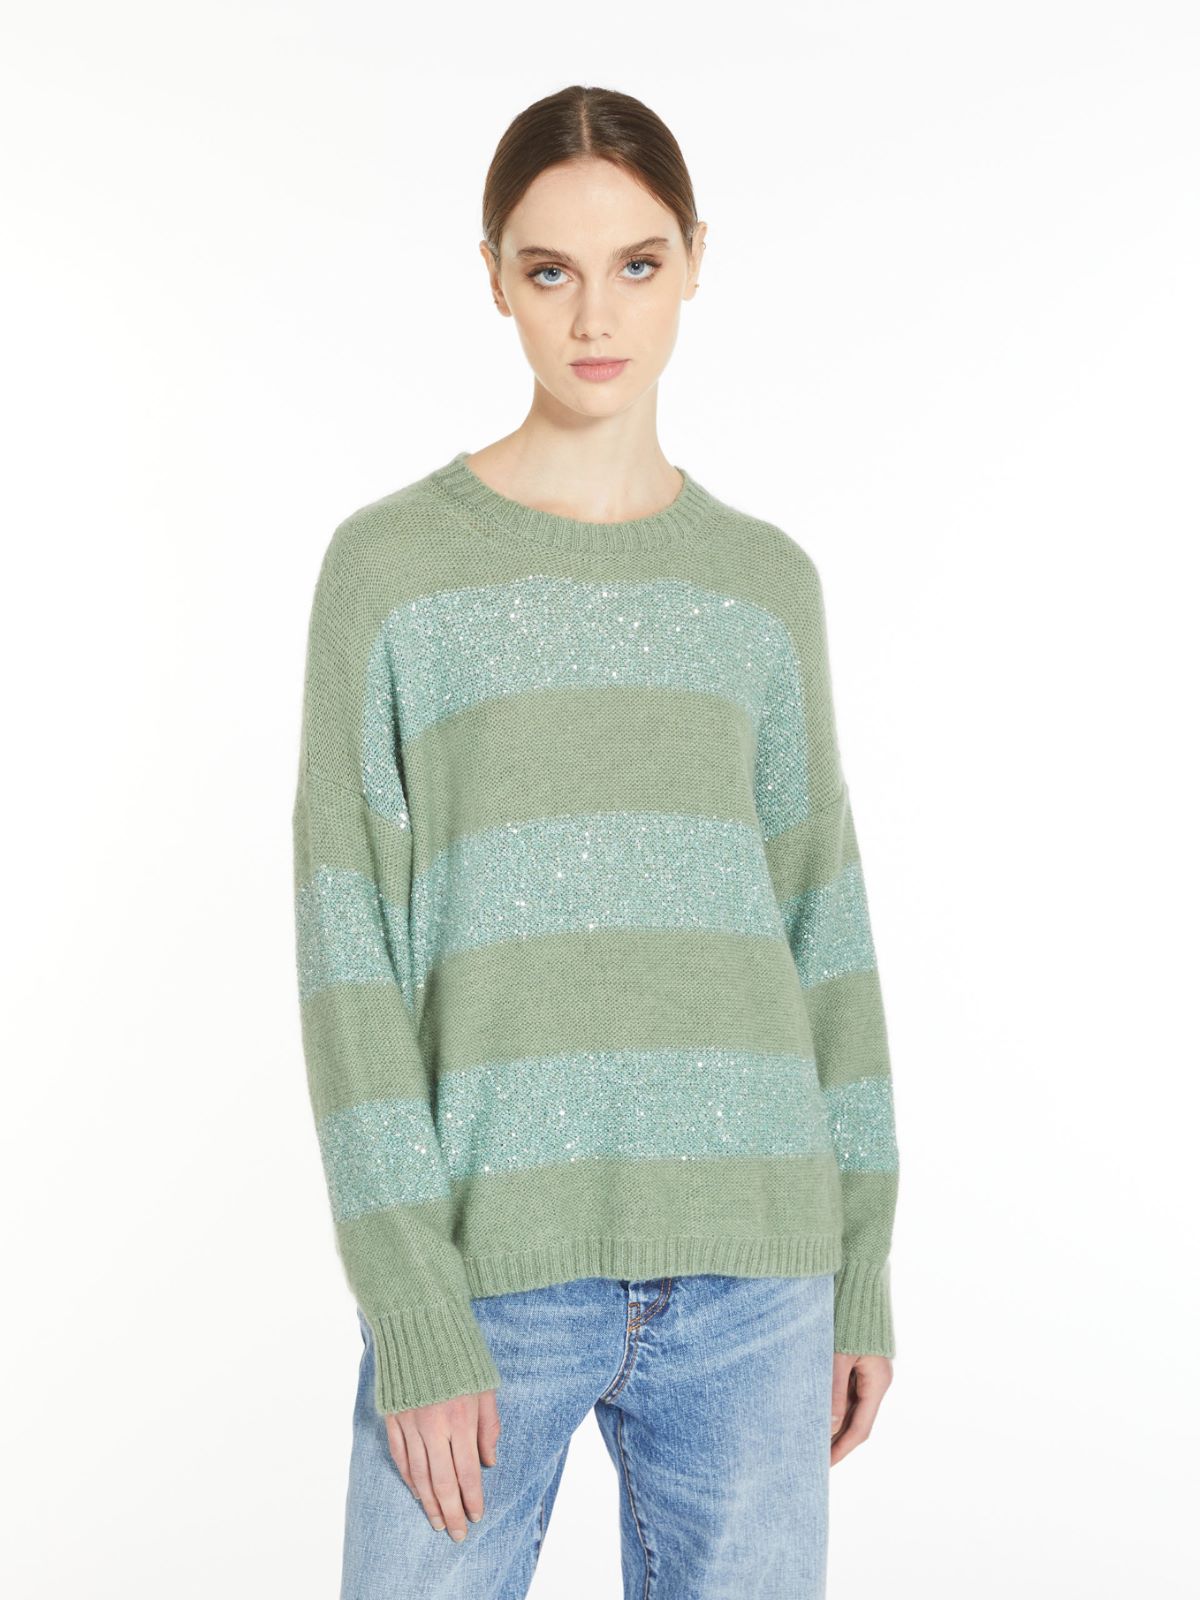 Sequin sweater Weekend Maxmara